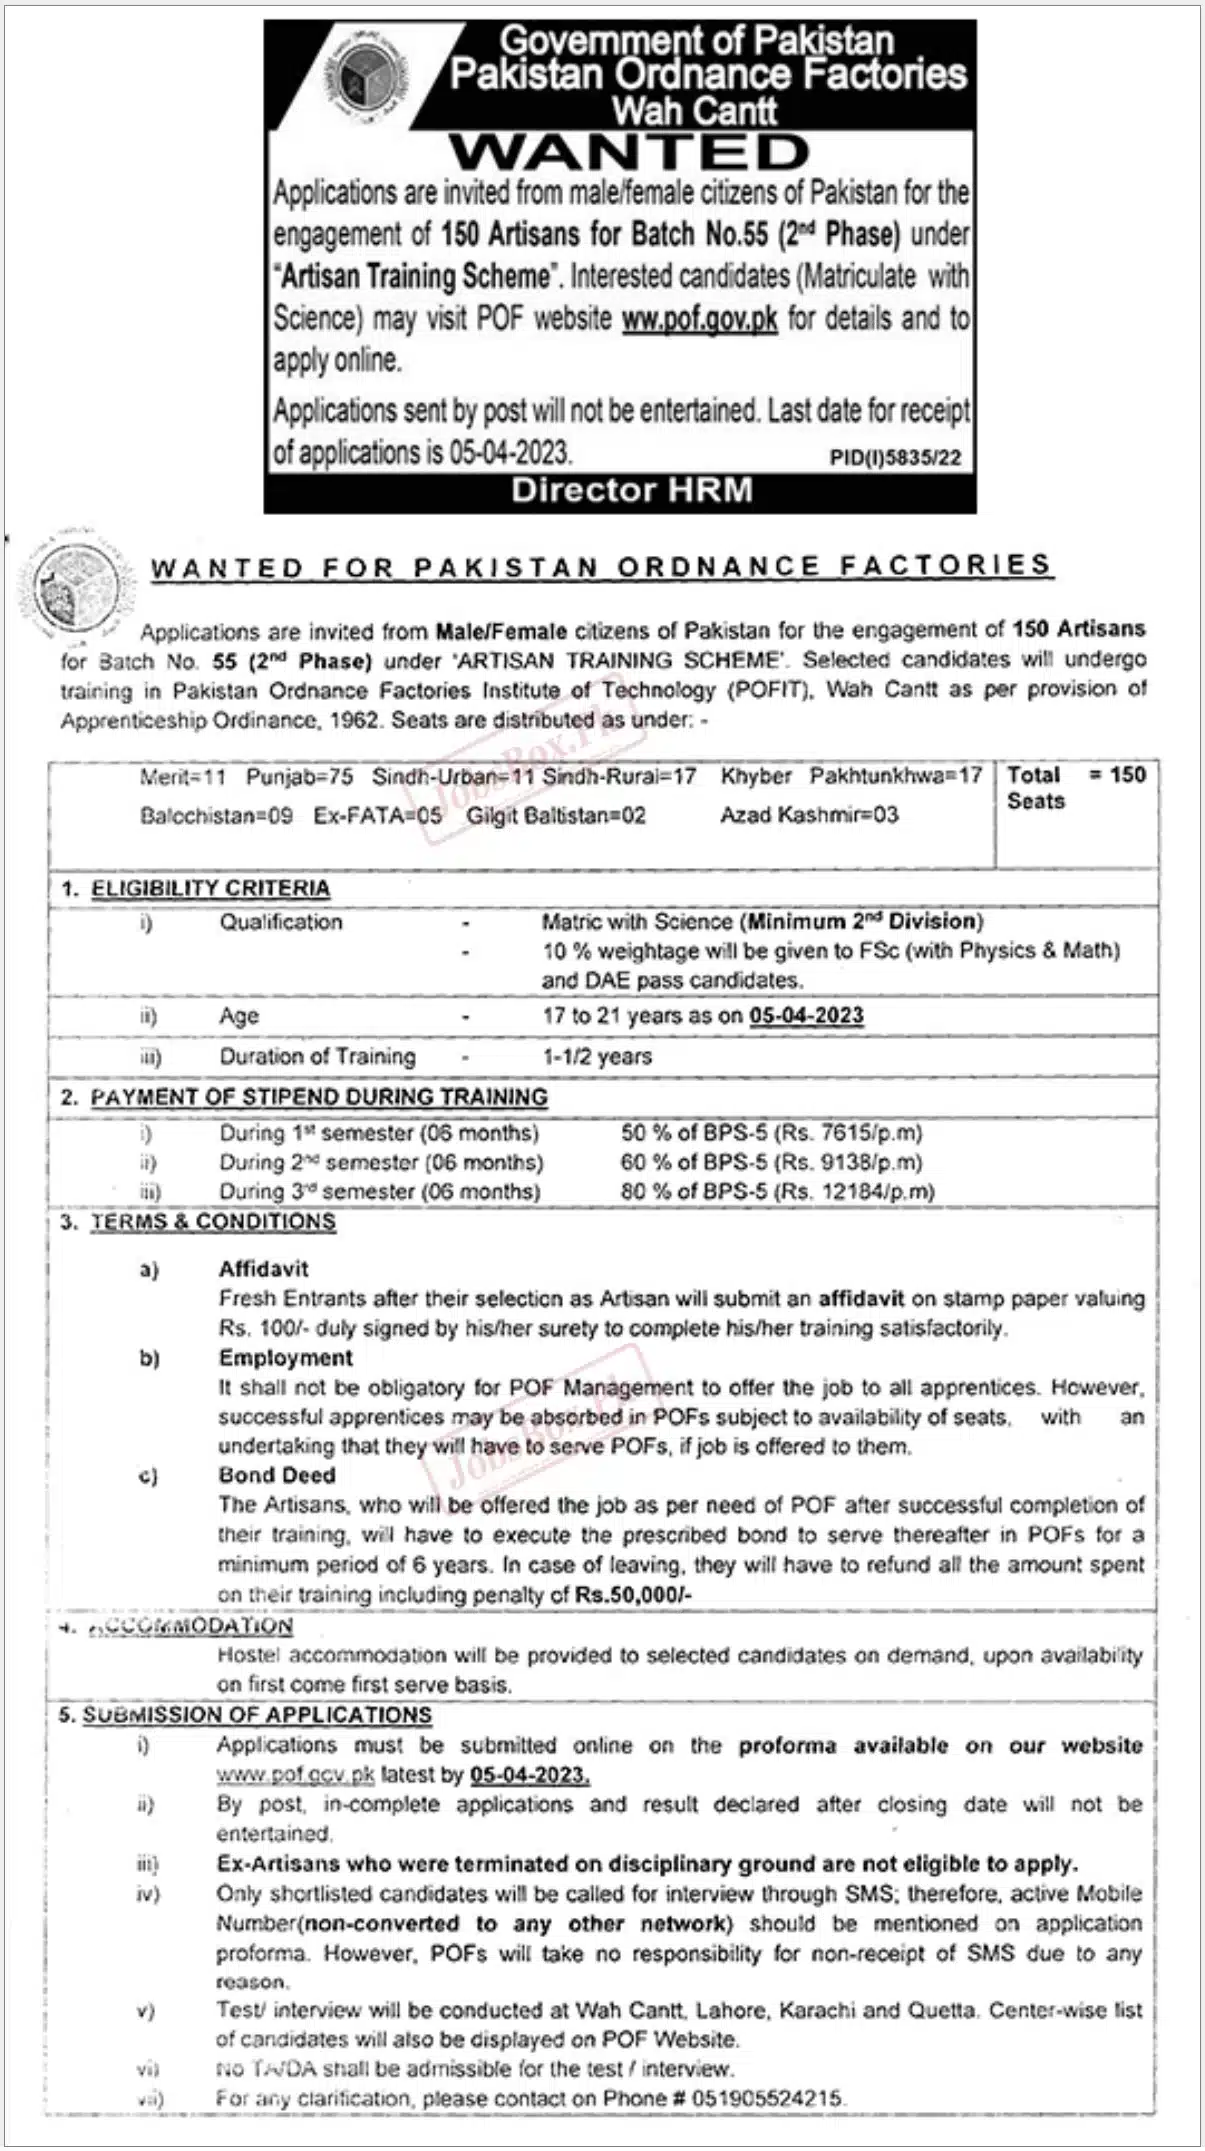 Pakistan Ordnance Factories POF Artisans Training Scheme Batch No. 55 